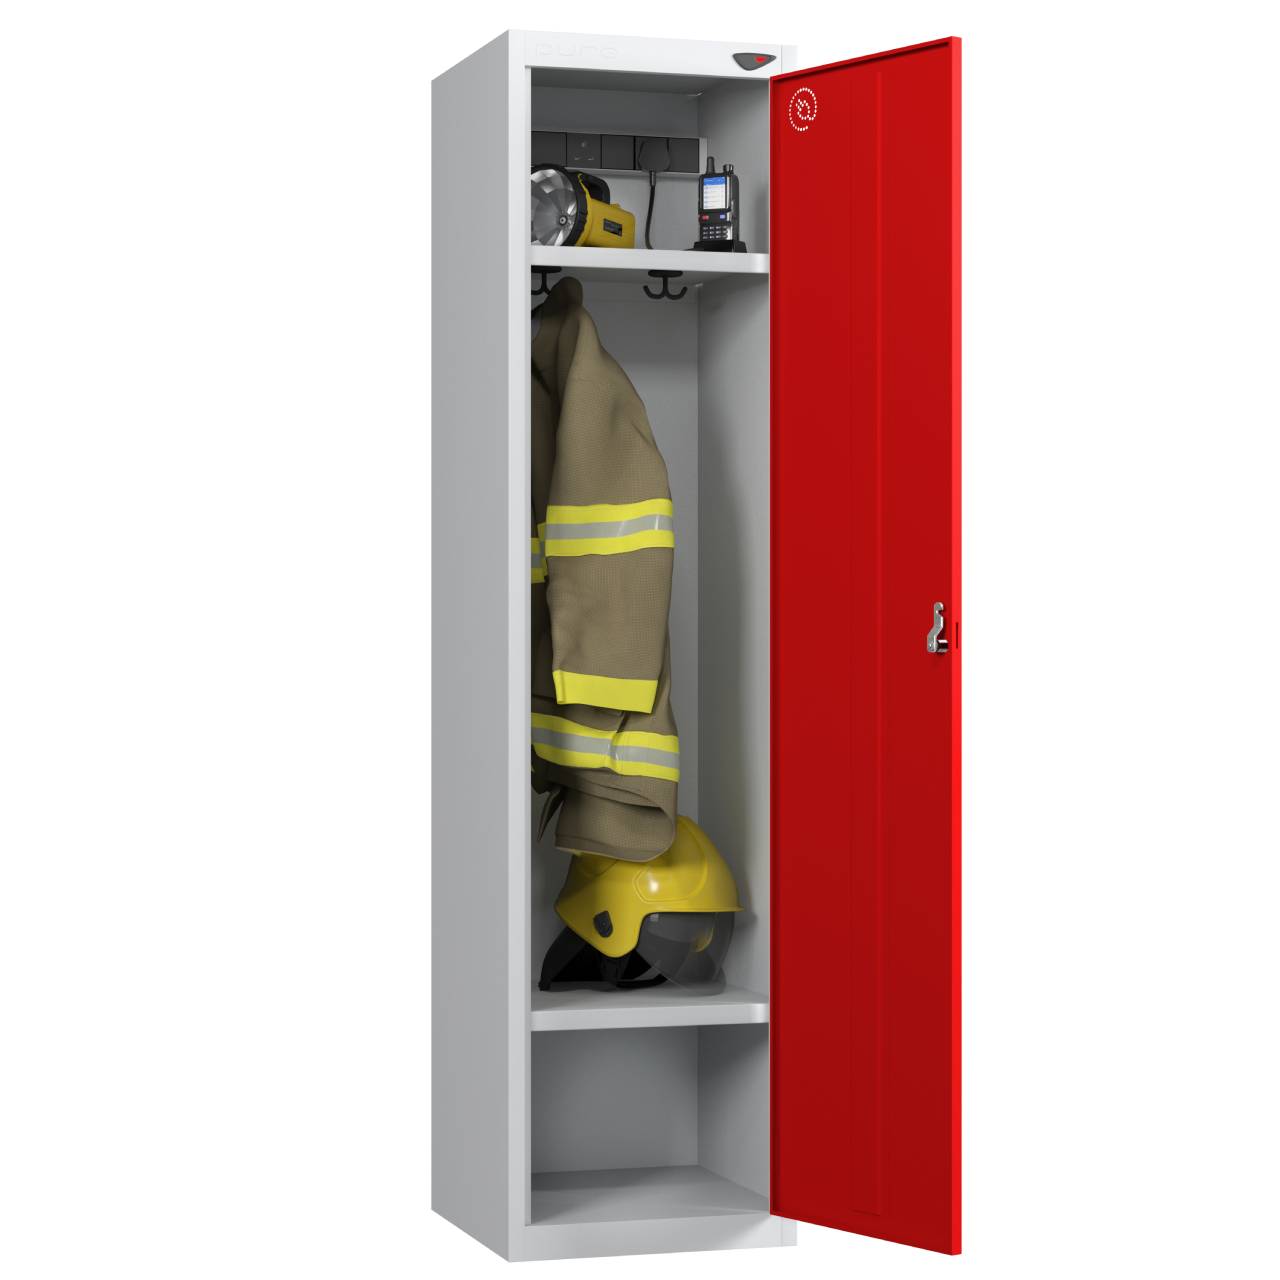 Pure Power 1 Door Fire Service Emergency Service Locker, Silver Carcass, Red Door